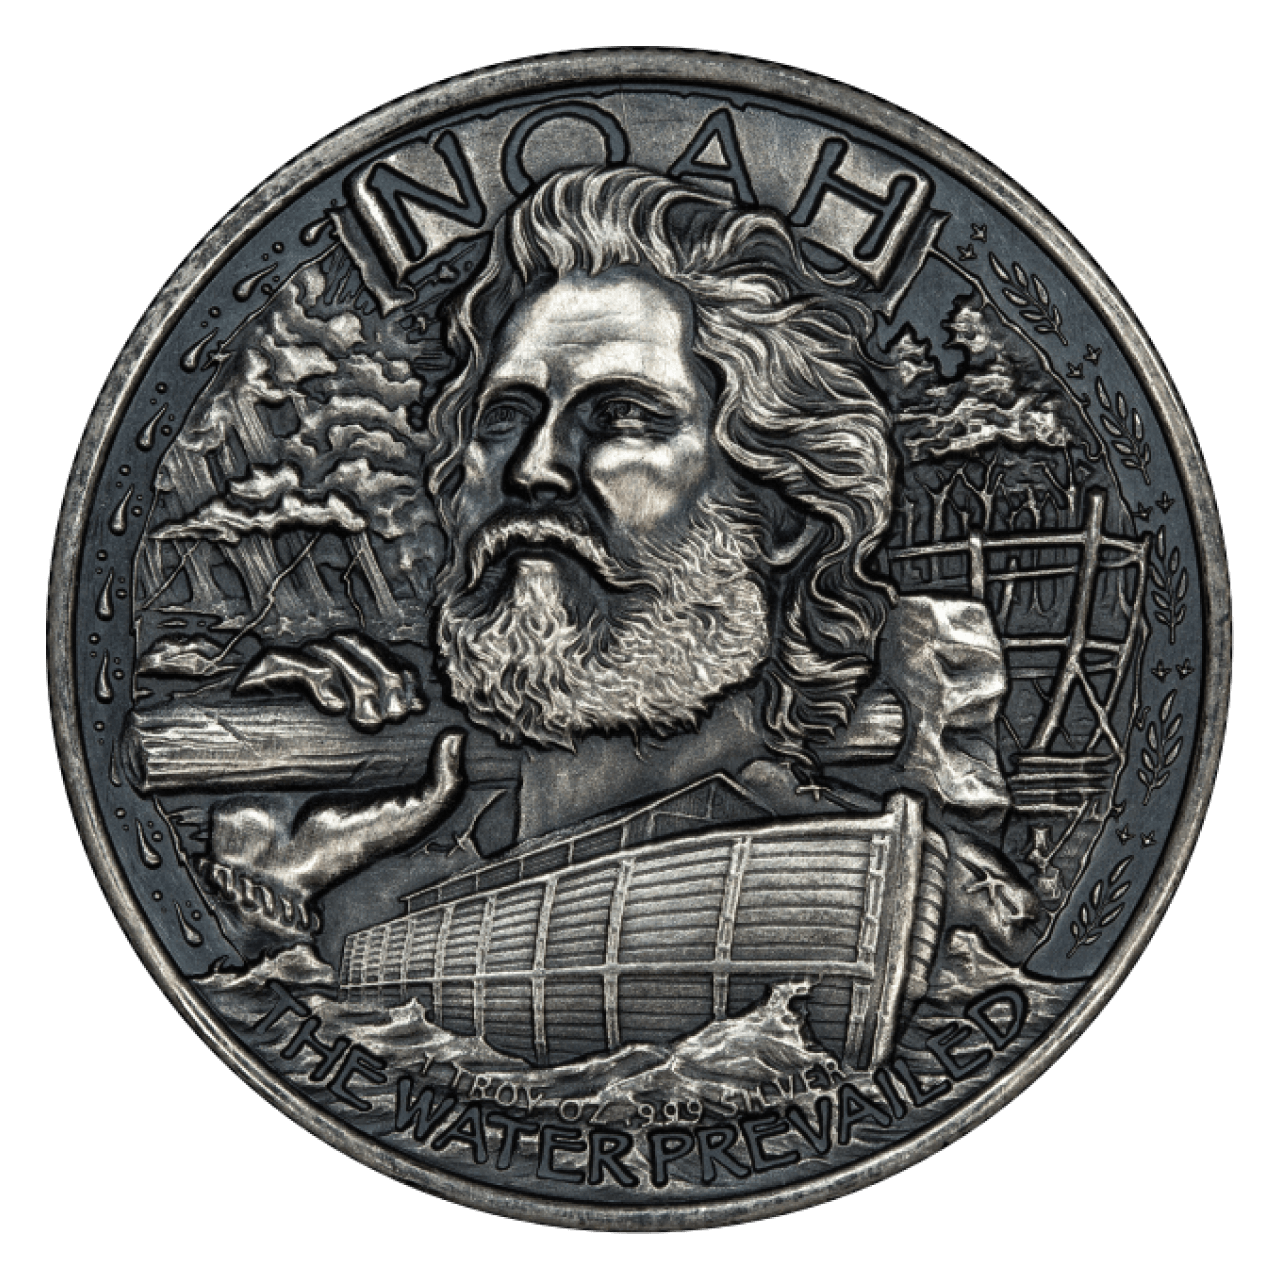 Noah's Ark 1 oz Silver Round - Antique Finish (.999 Pure)